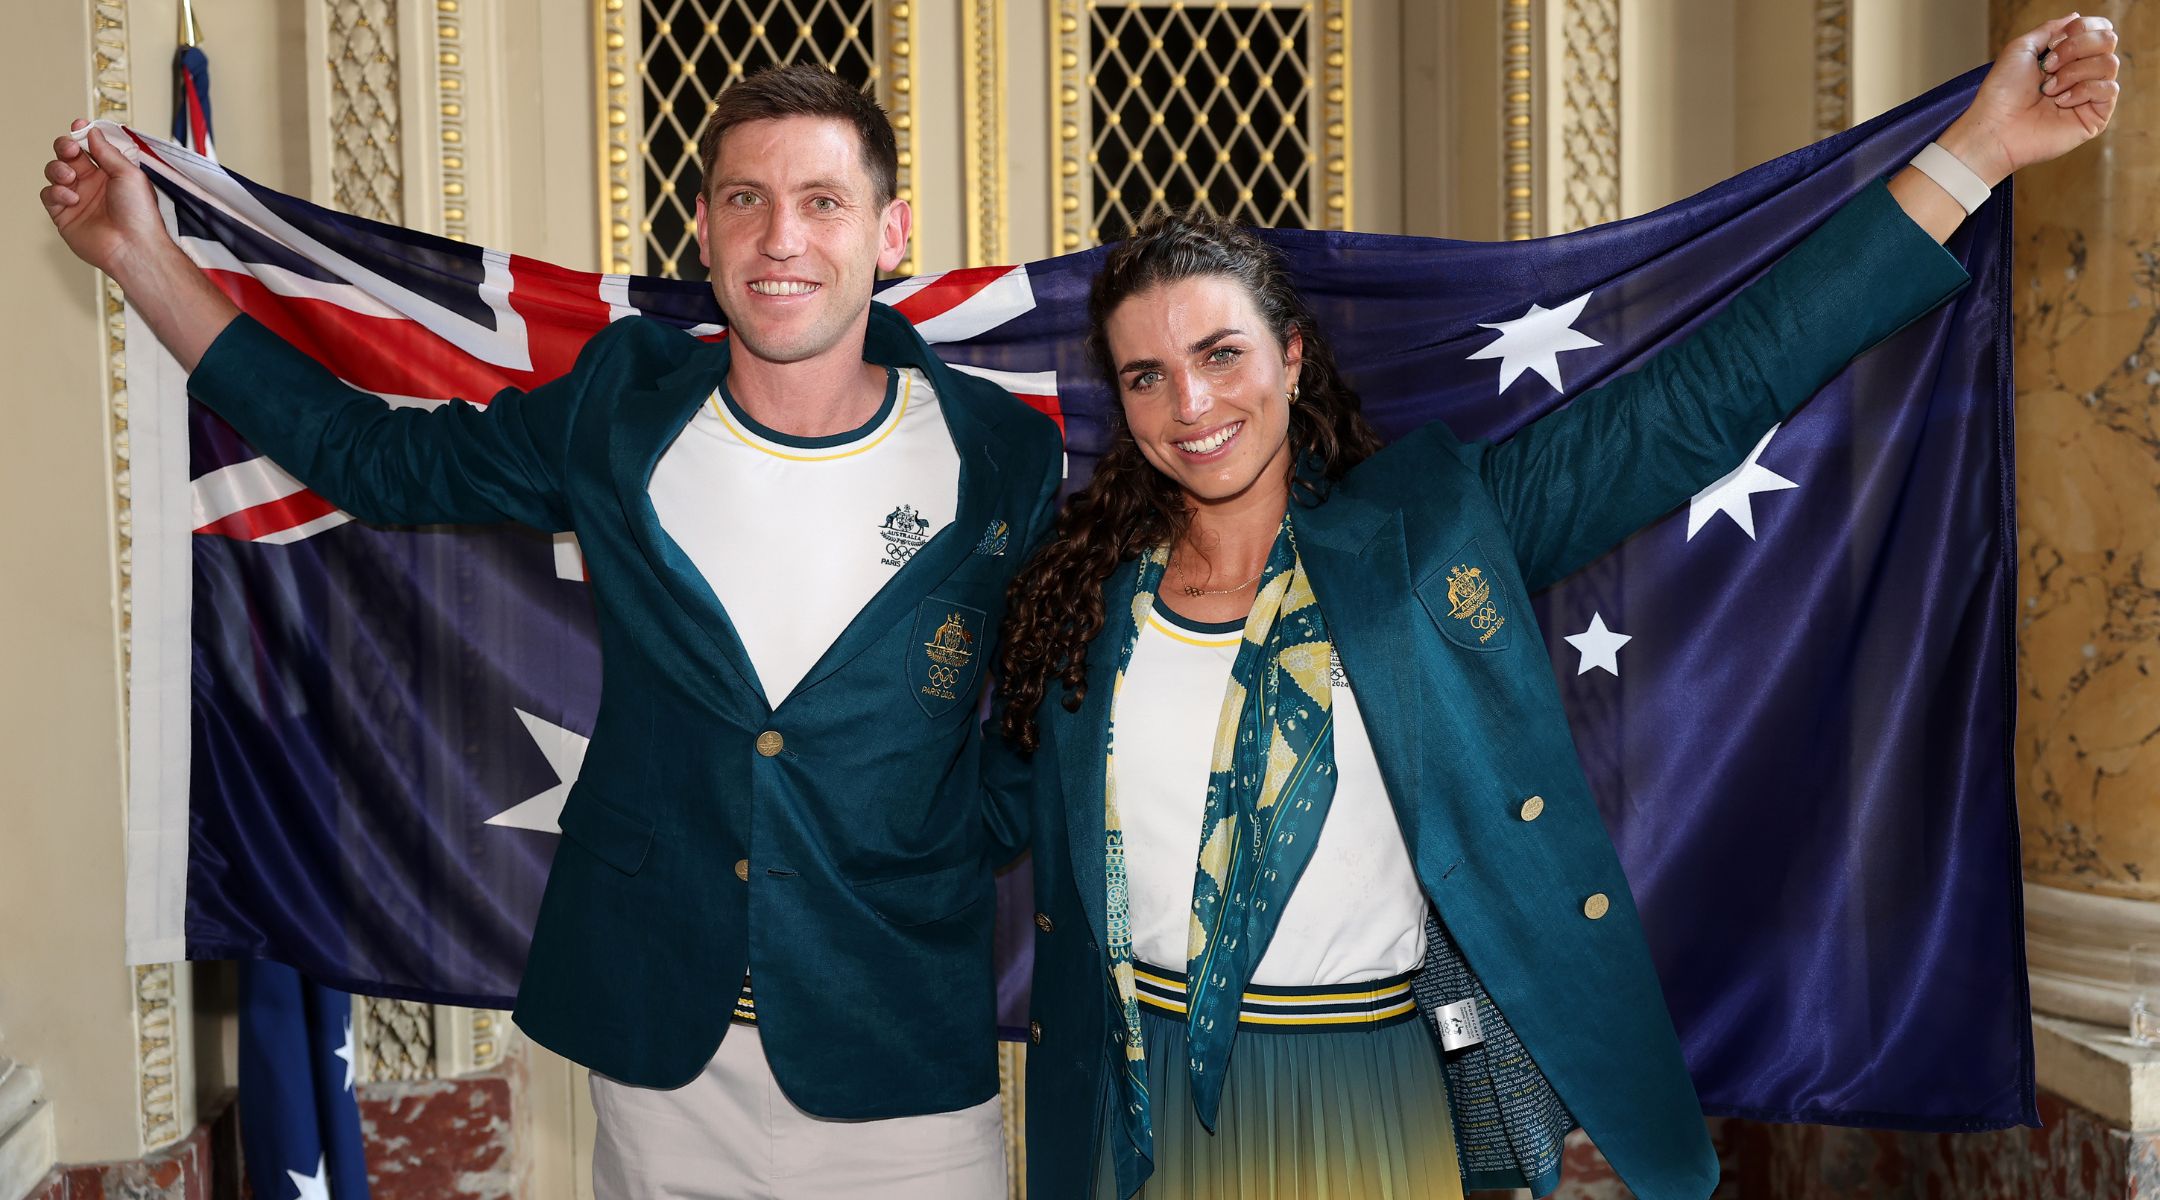 Jewish canoe legend Jessica Fox named Australia’s flag bearer for Paris Olympics opening ceremony